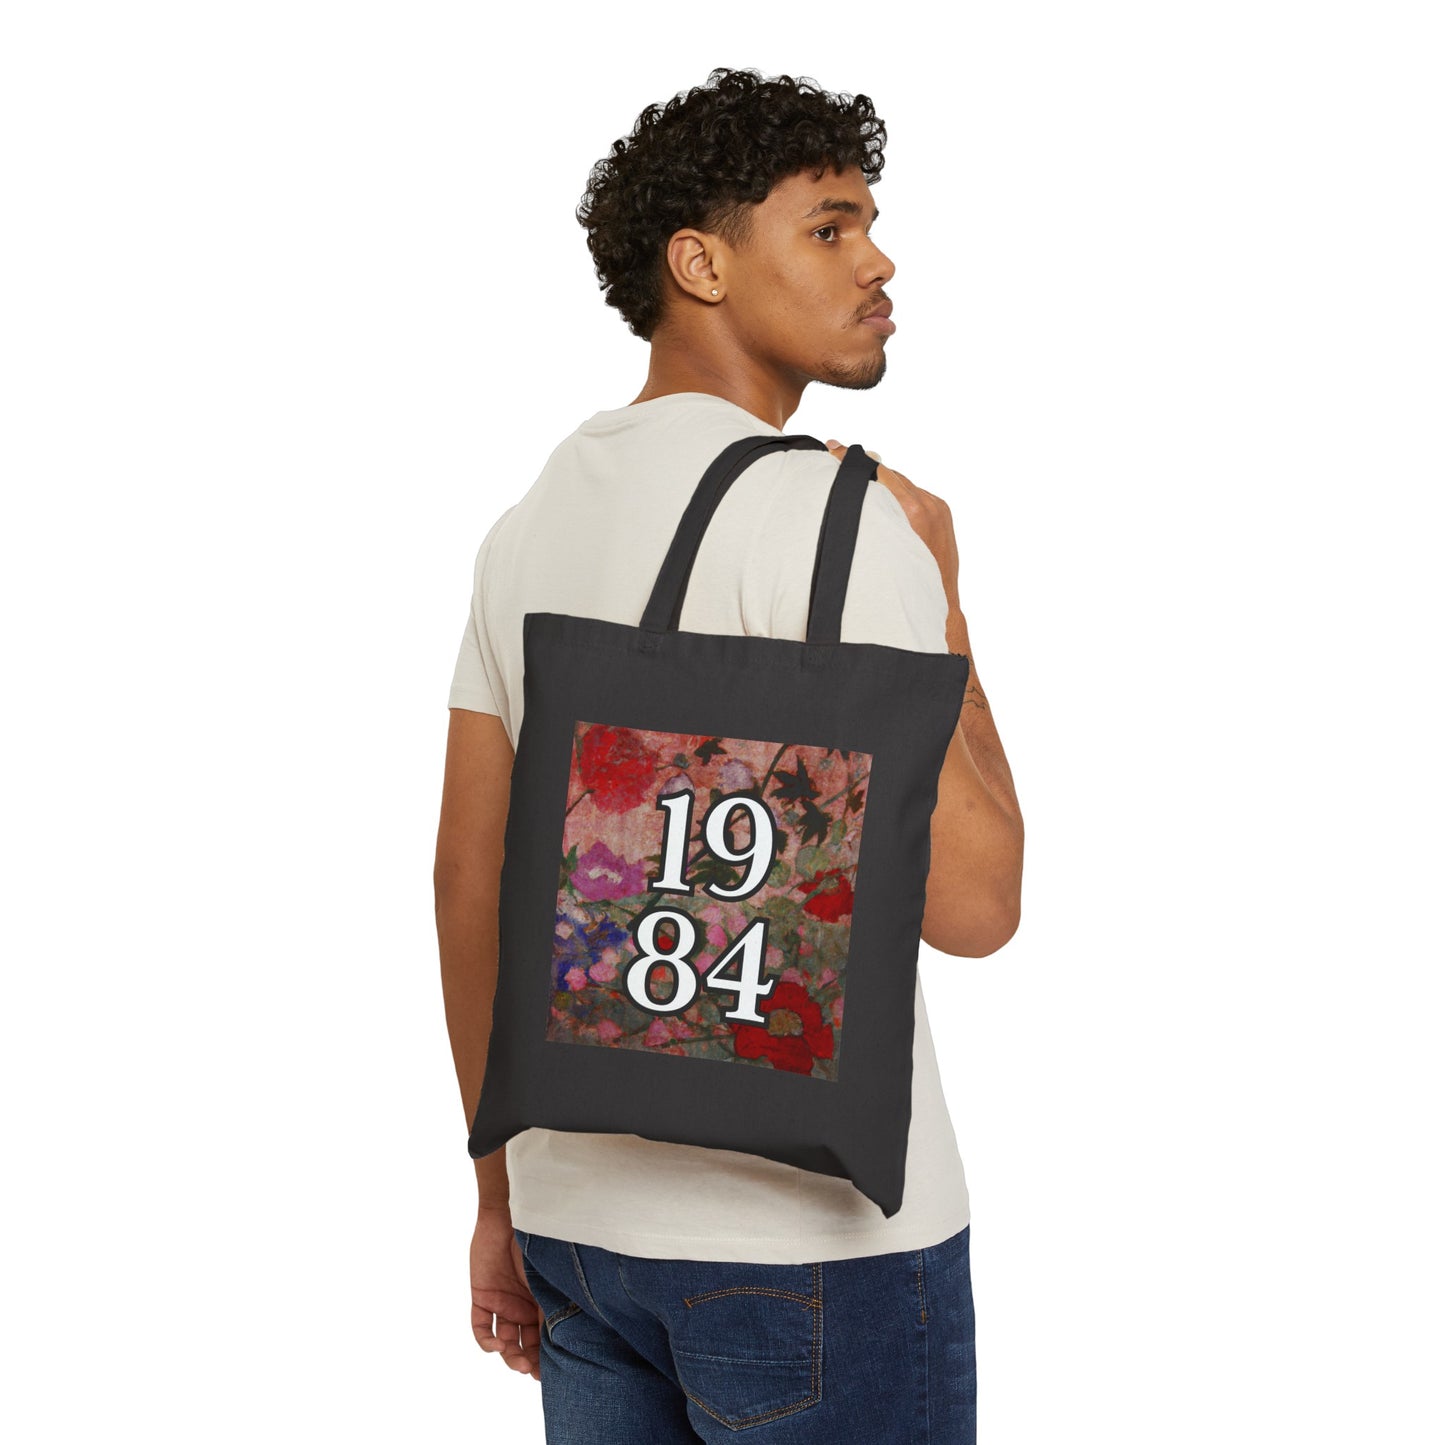 Nineteen 84 - Tote Bag